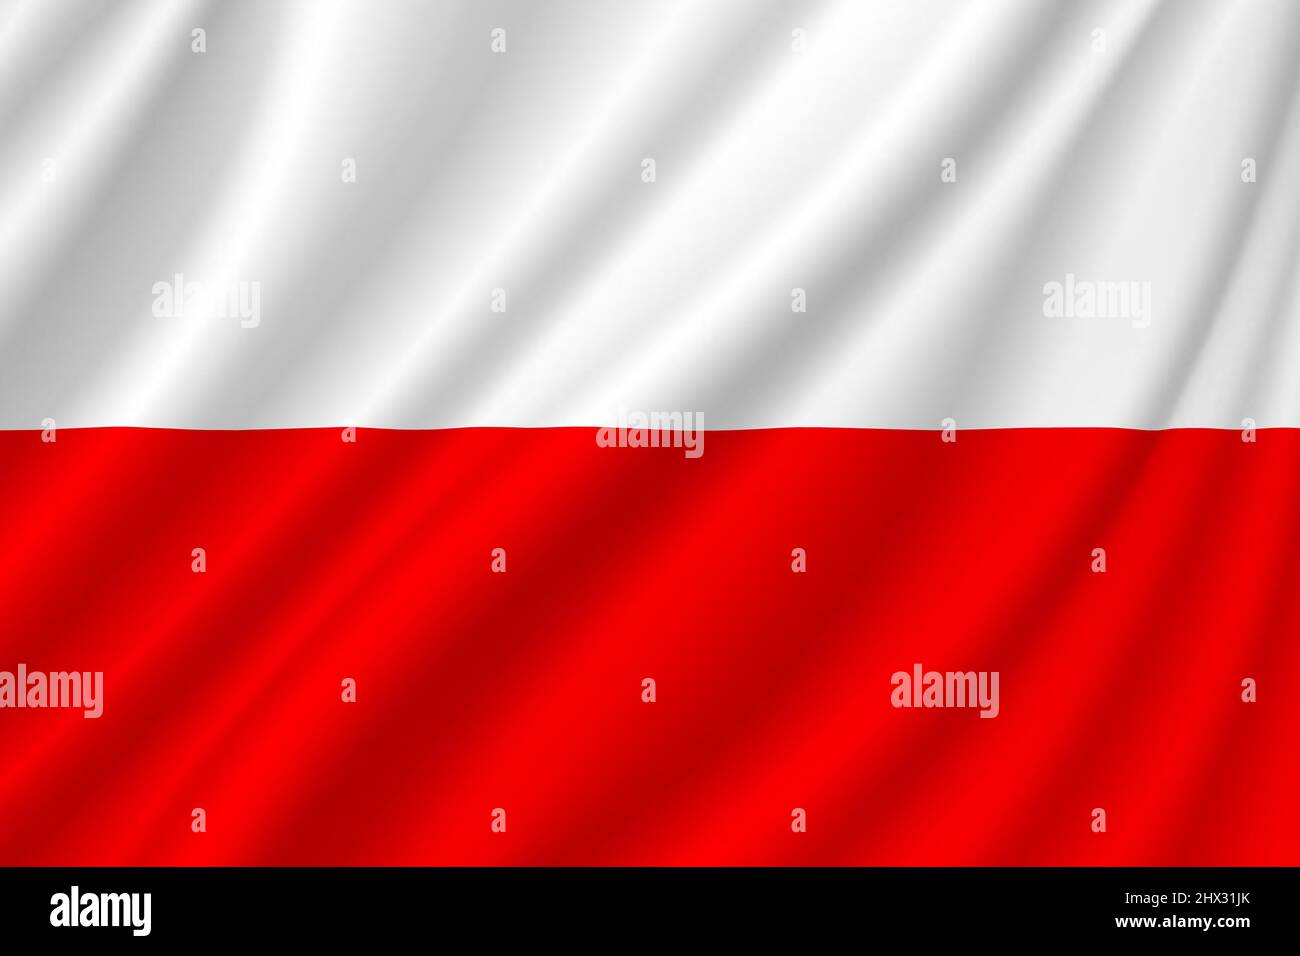 Poland flag. Illustration of the flag of Poland with ripples. Horizontal design. Illustration. Map. Stock Photo